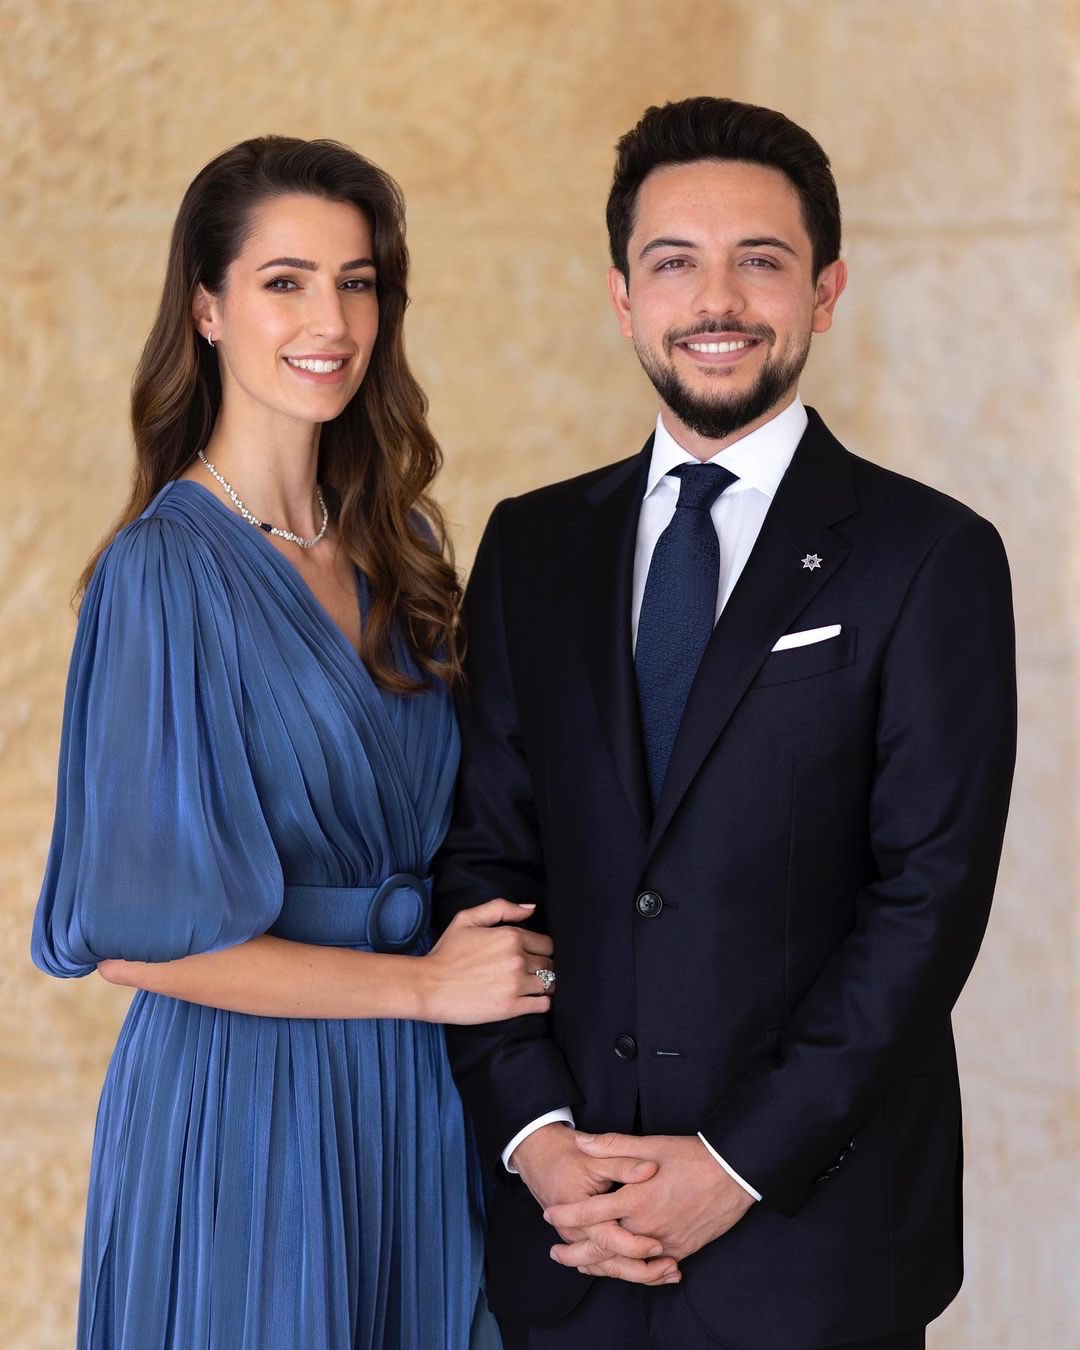 Crown Prince Al Hussein of Jordan shared a new picture with his future wife Rajwa Al Saif